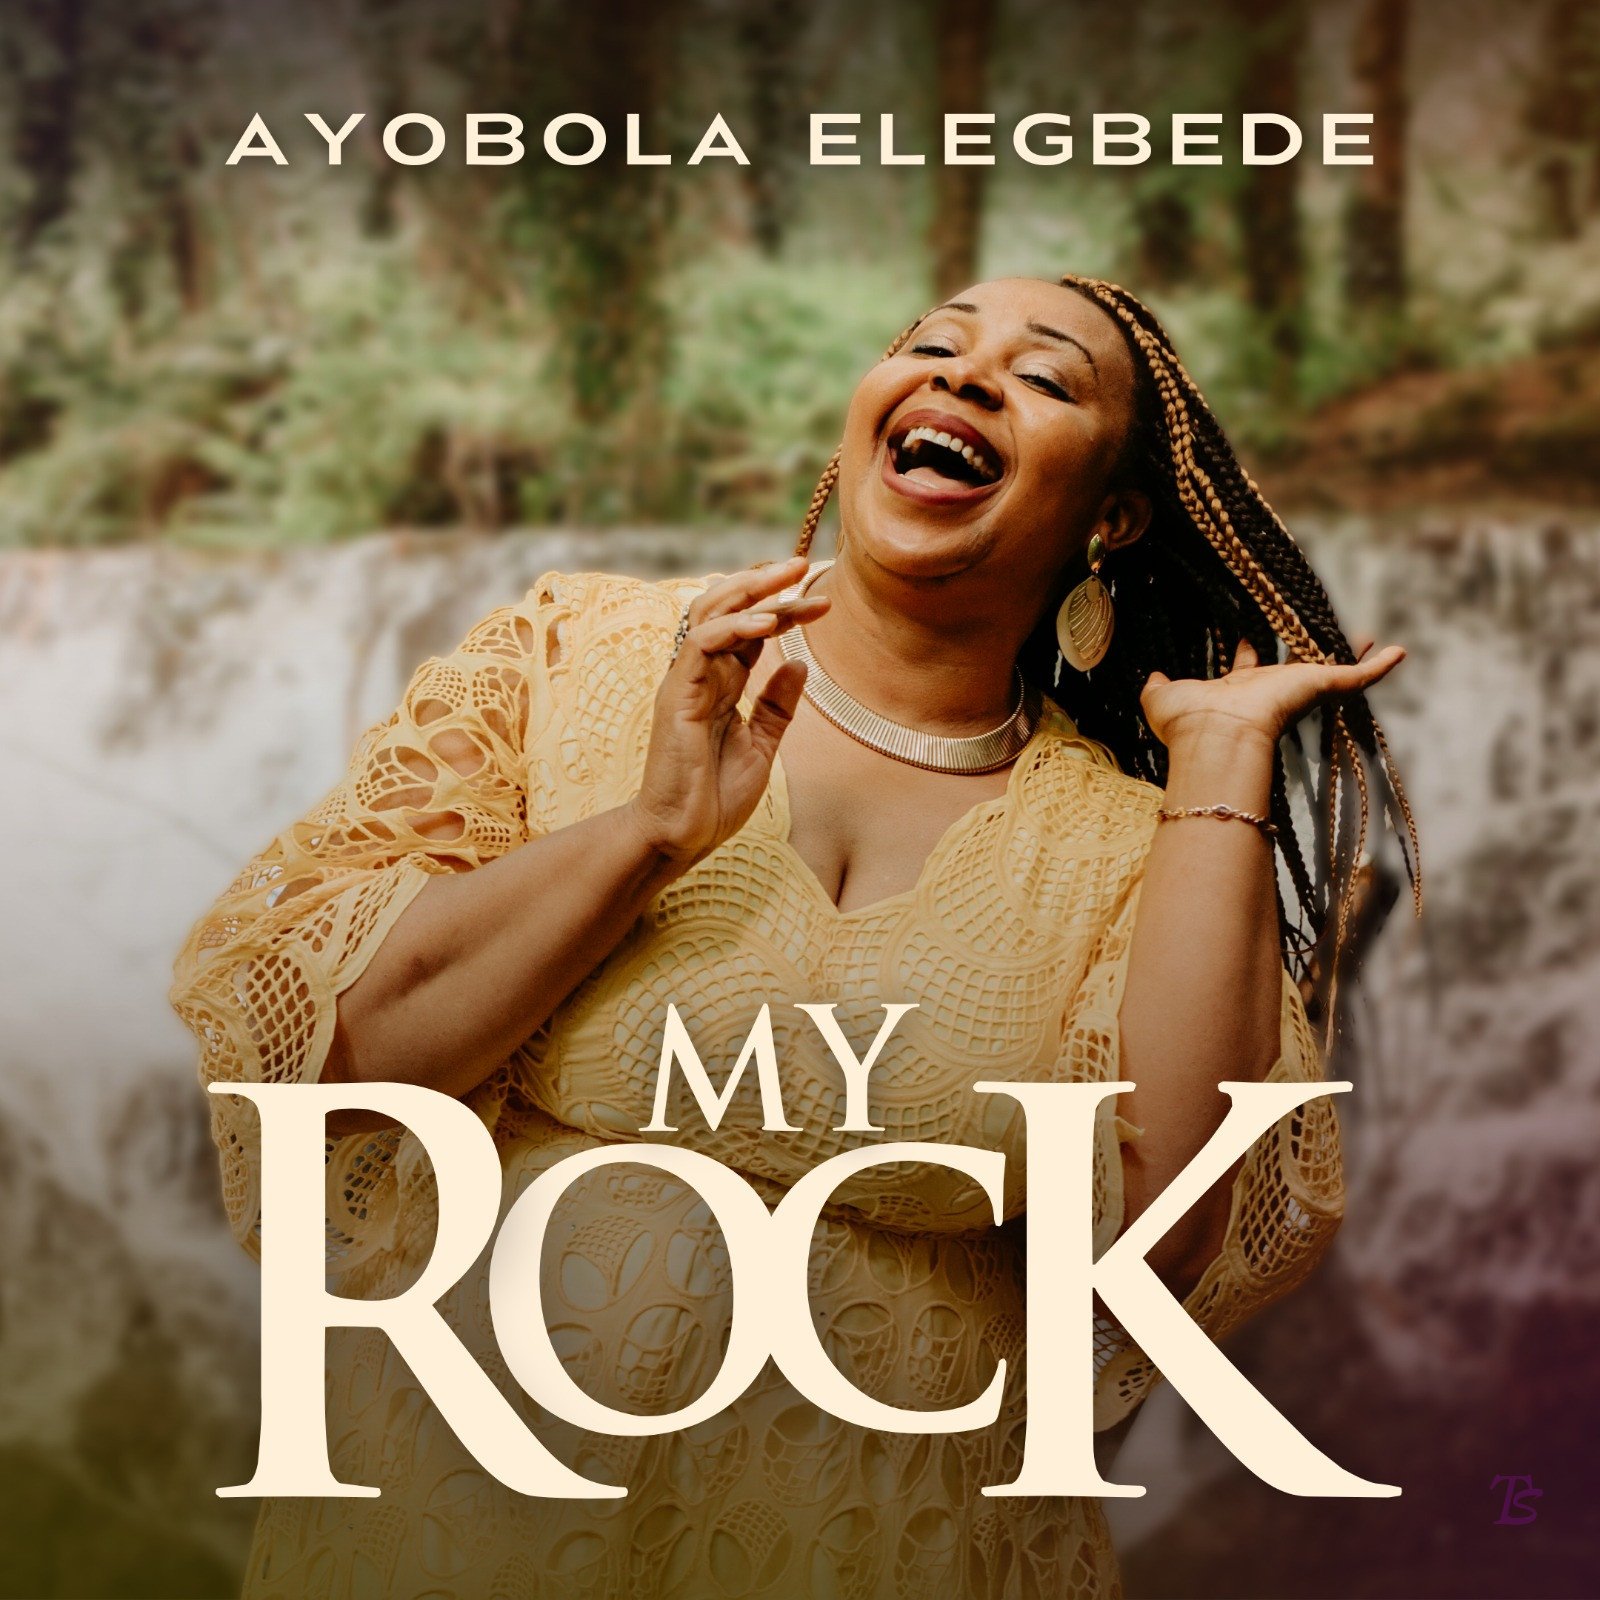 YOBOLA ELEGBEDE RELEASED “MY ROCK” MP3 DOWNLOAD